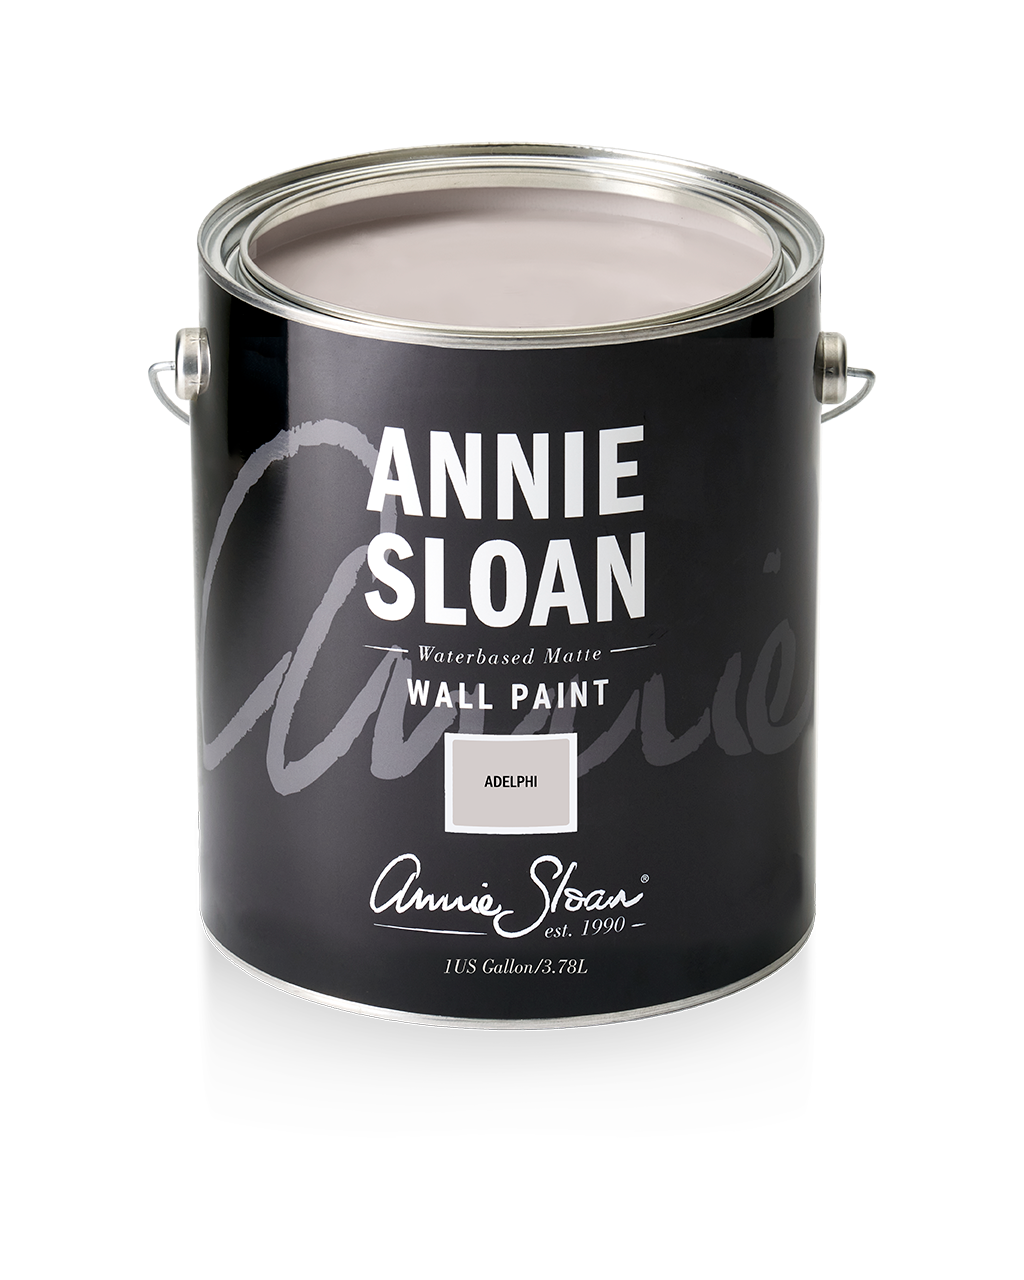 Annie Sloan Wall Paint - Adelphi